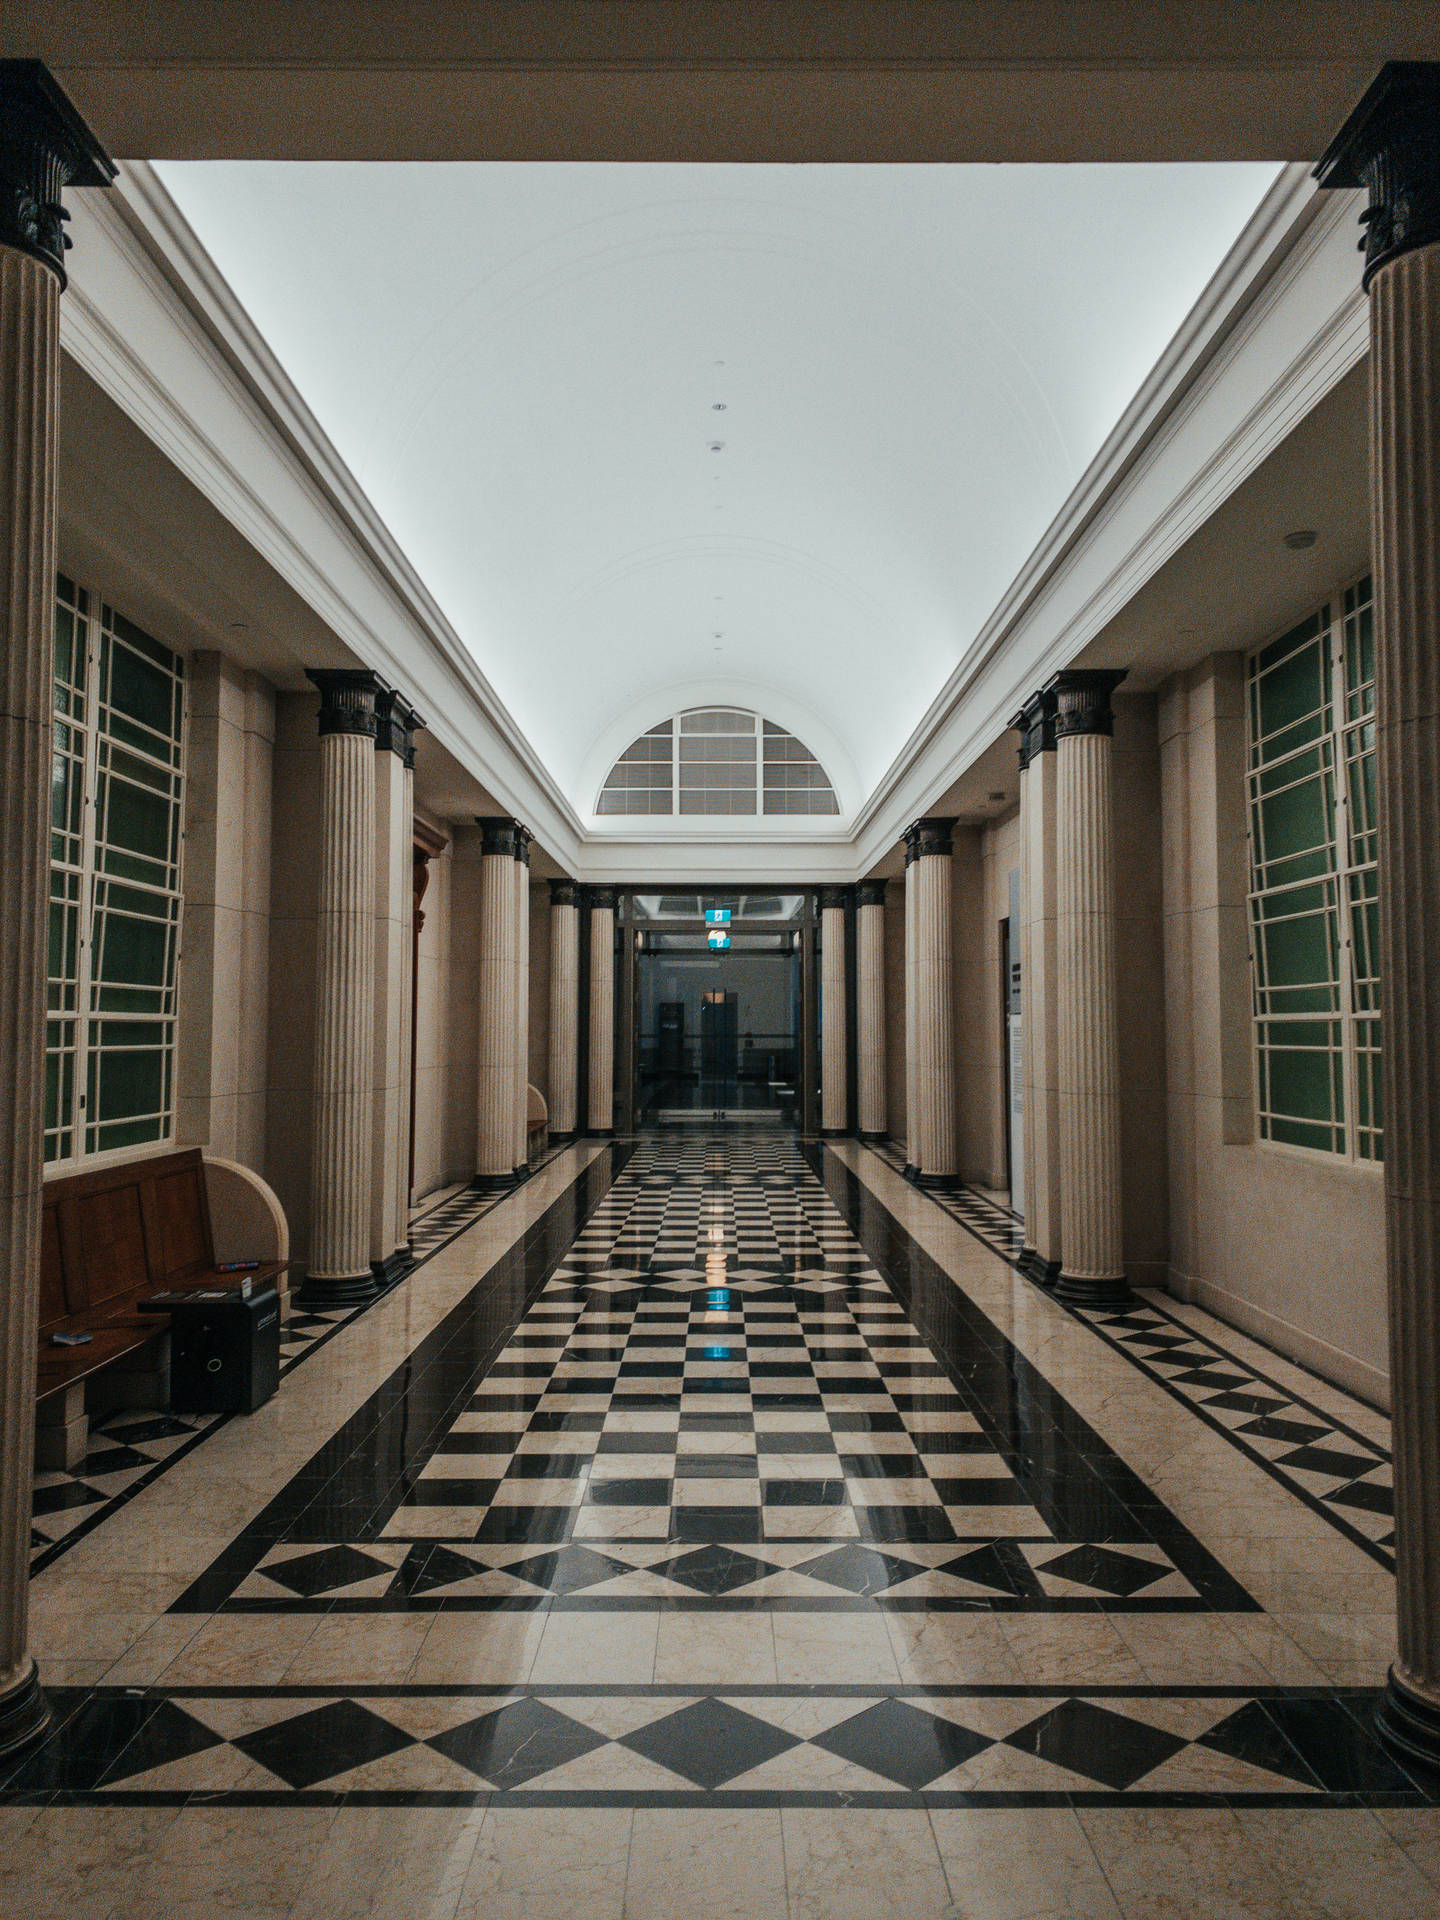 Empty Hallway With Checkered Floor